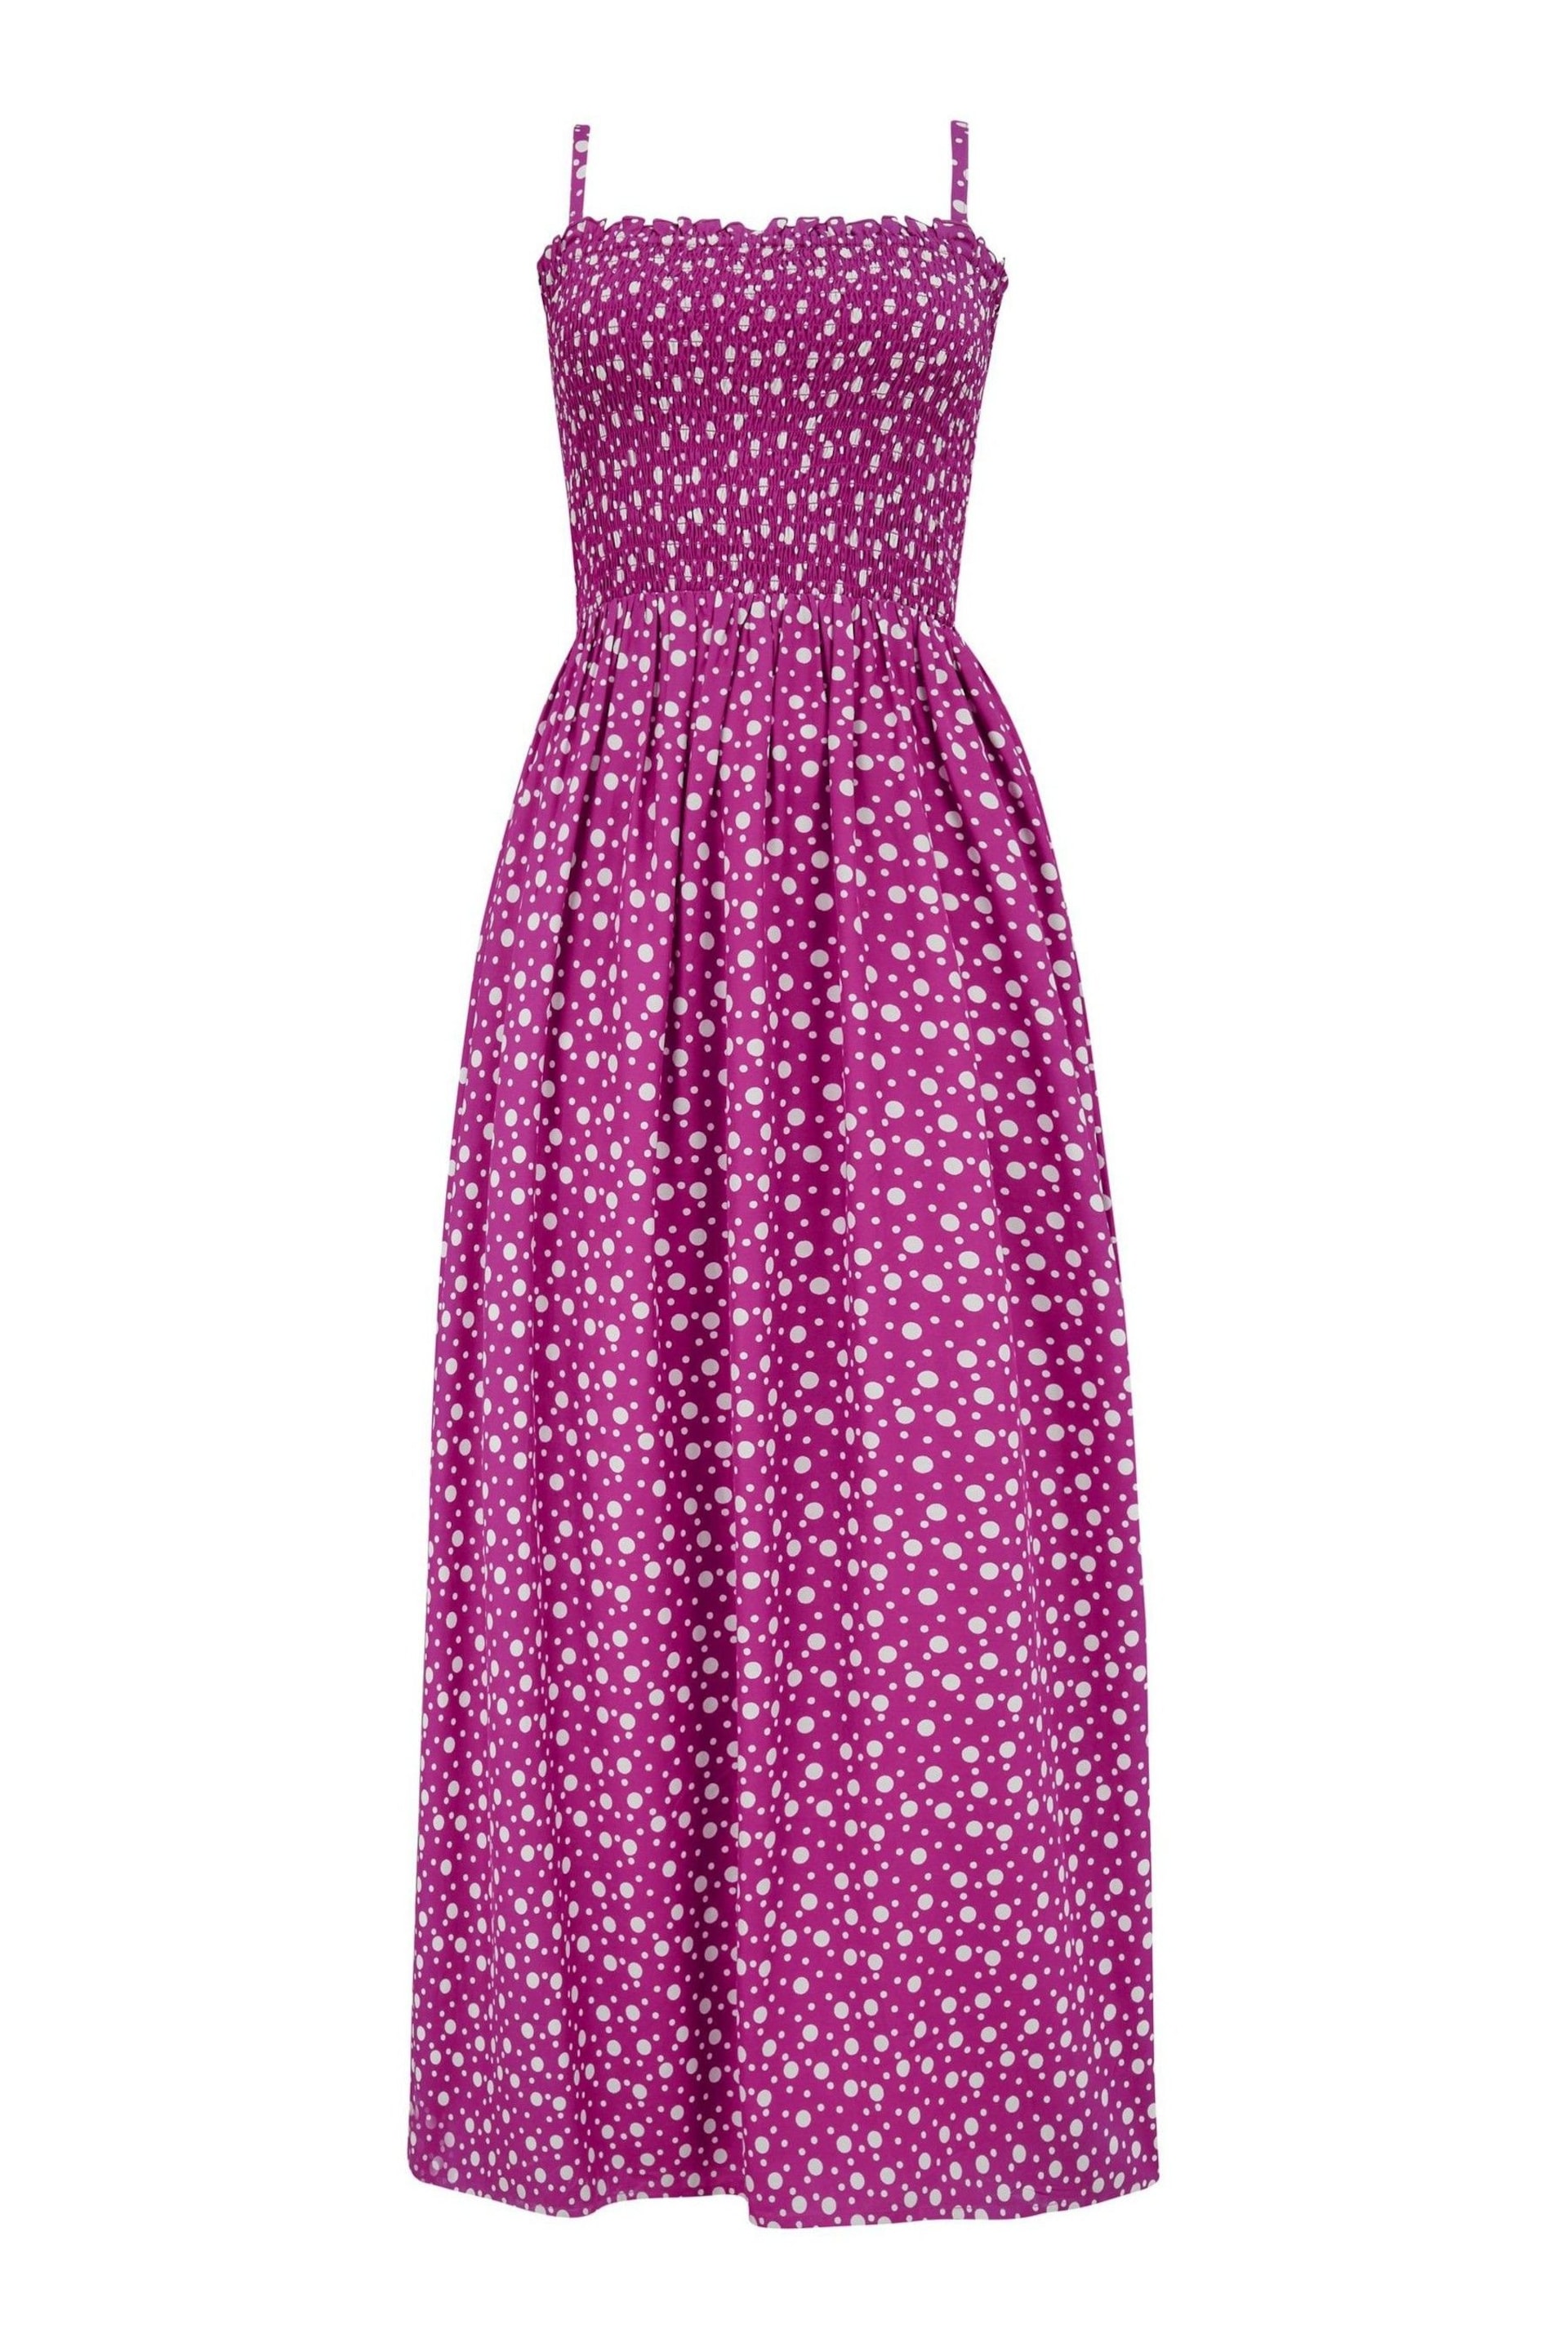 Pour Moi Purple Strapless Shirred Bodice Maxi Beach Dress - Image 3 of 4